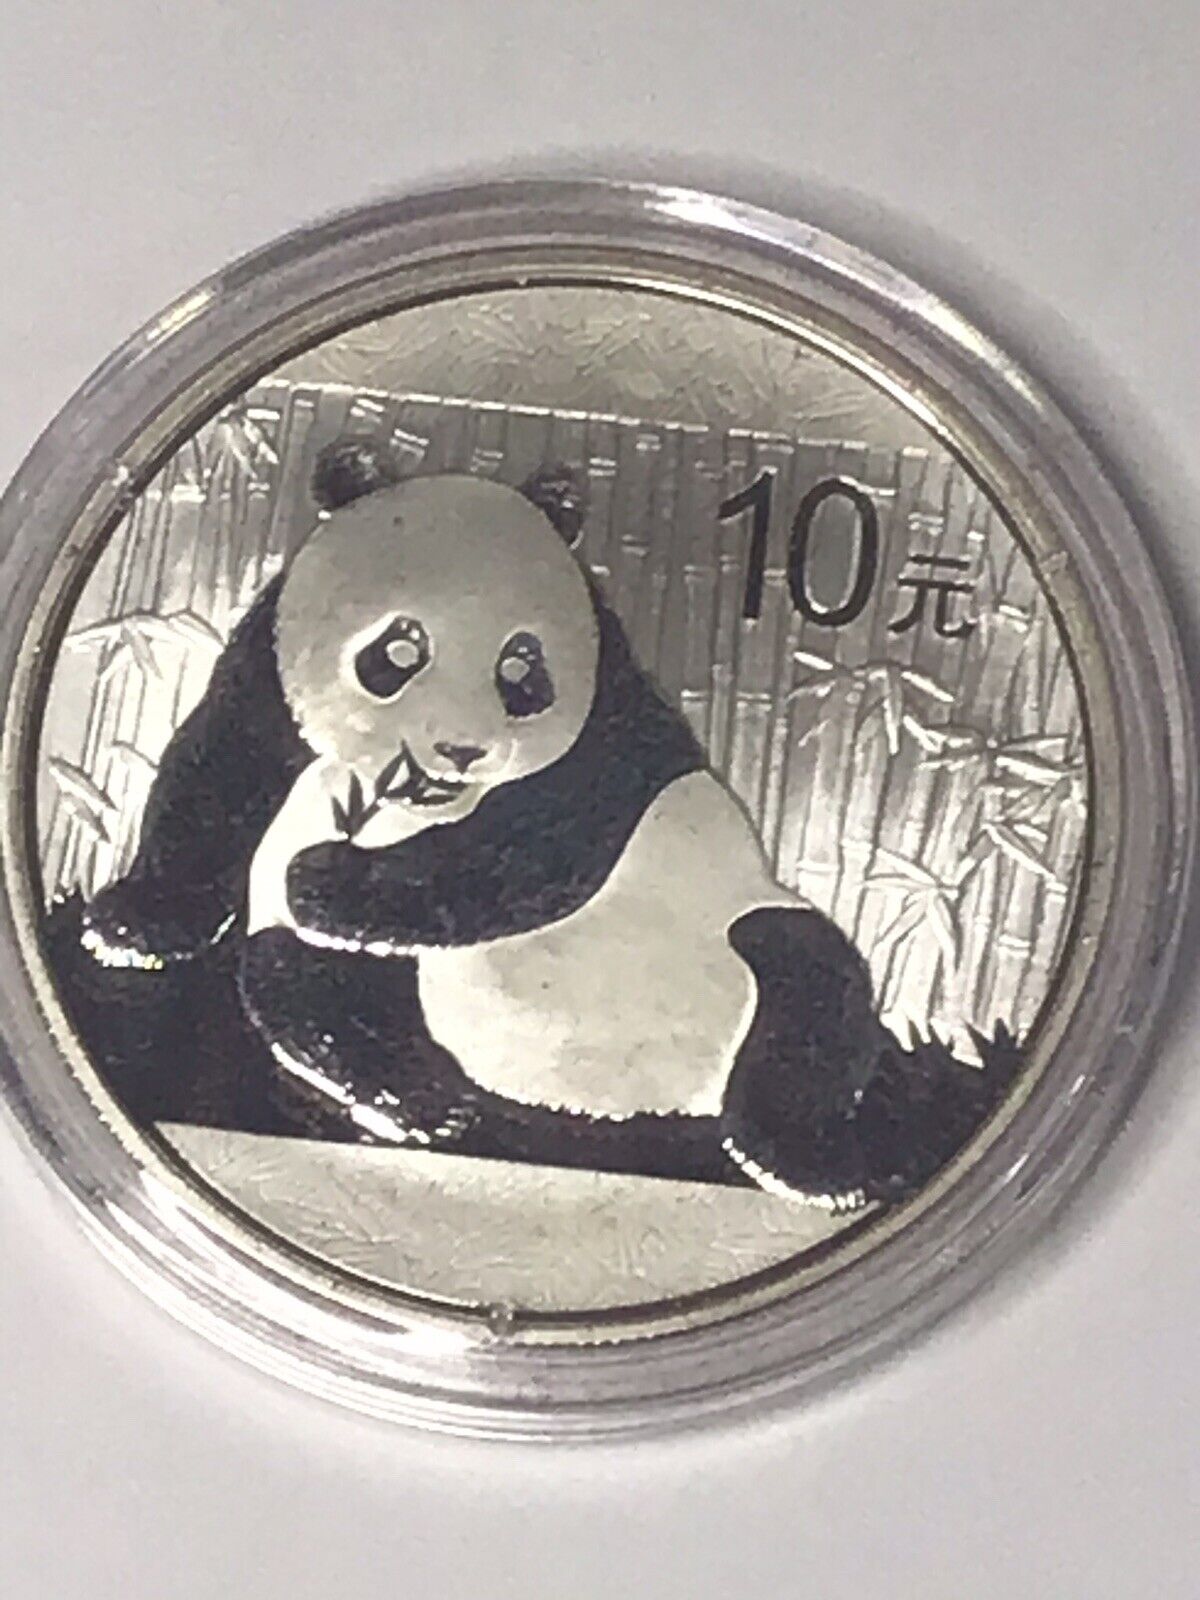 2015 China Silver Panda Coin 1 Oz .999 Fine 10 Yuan Chinese In Capsule